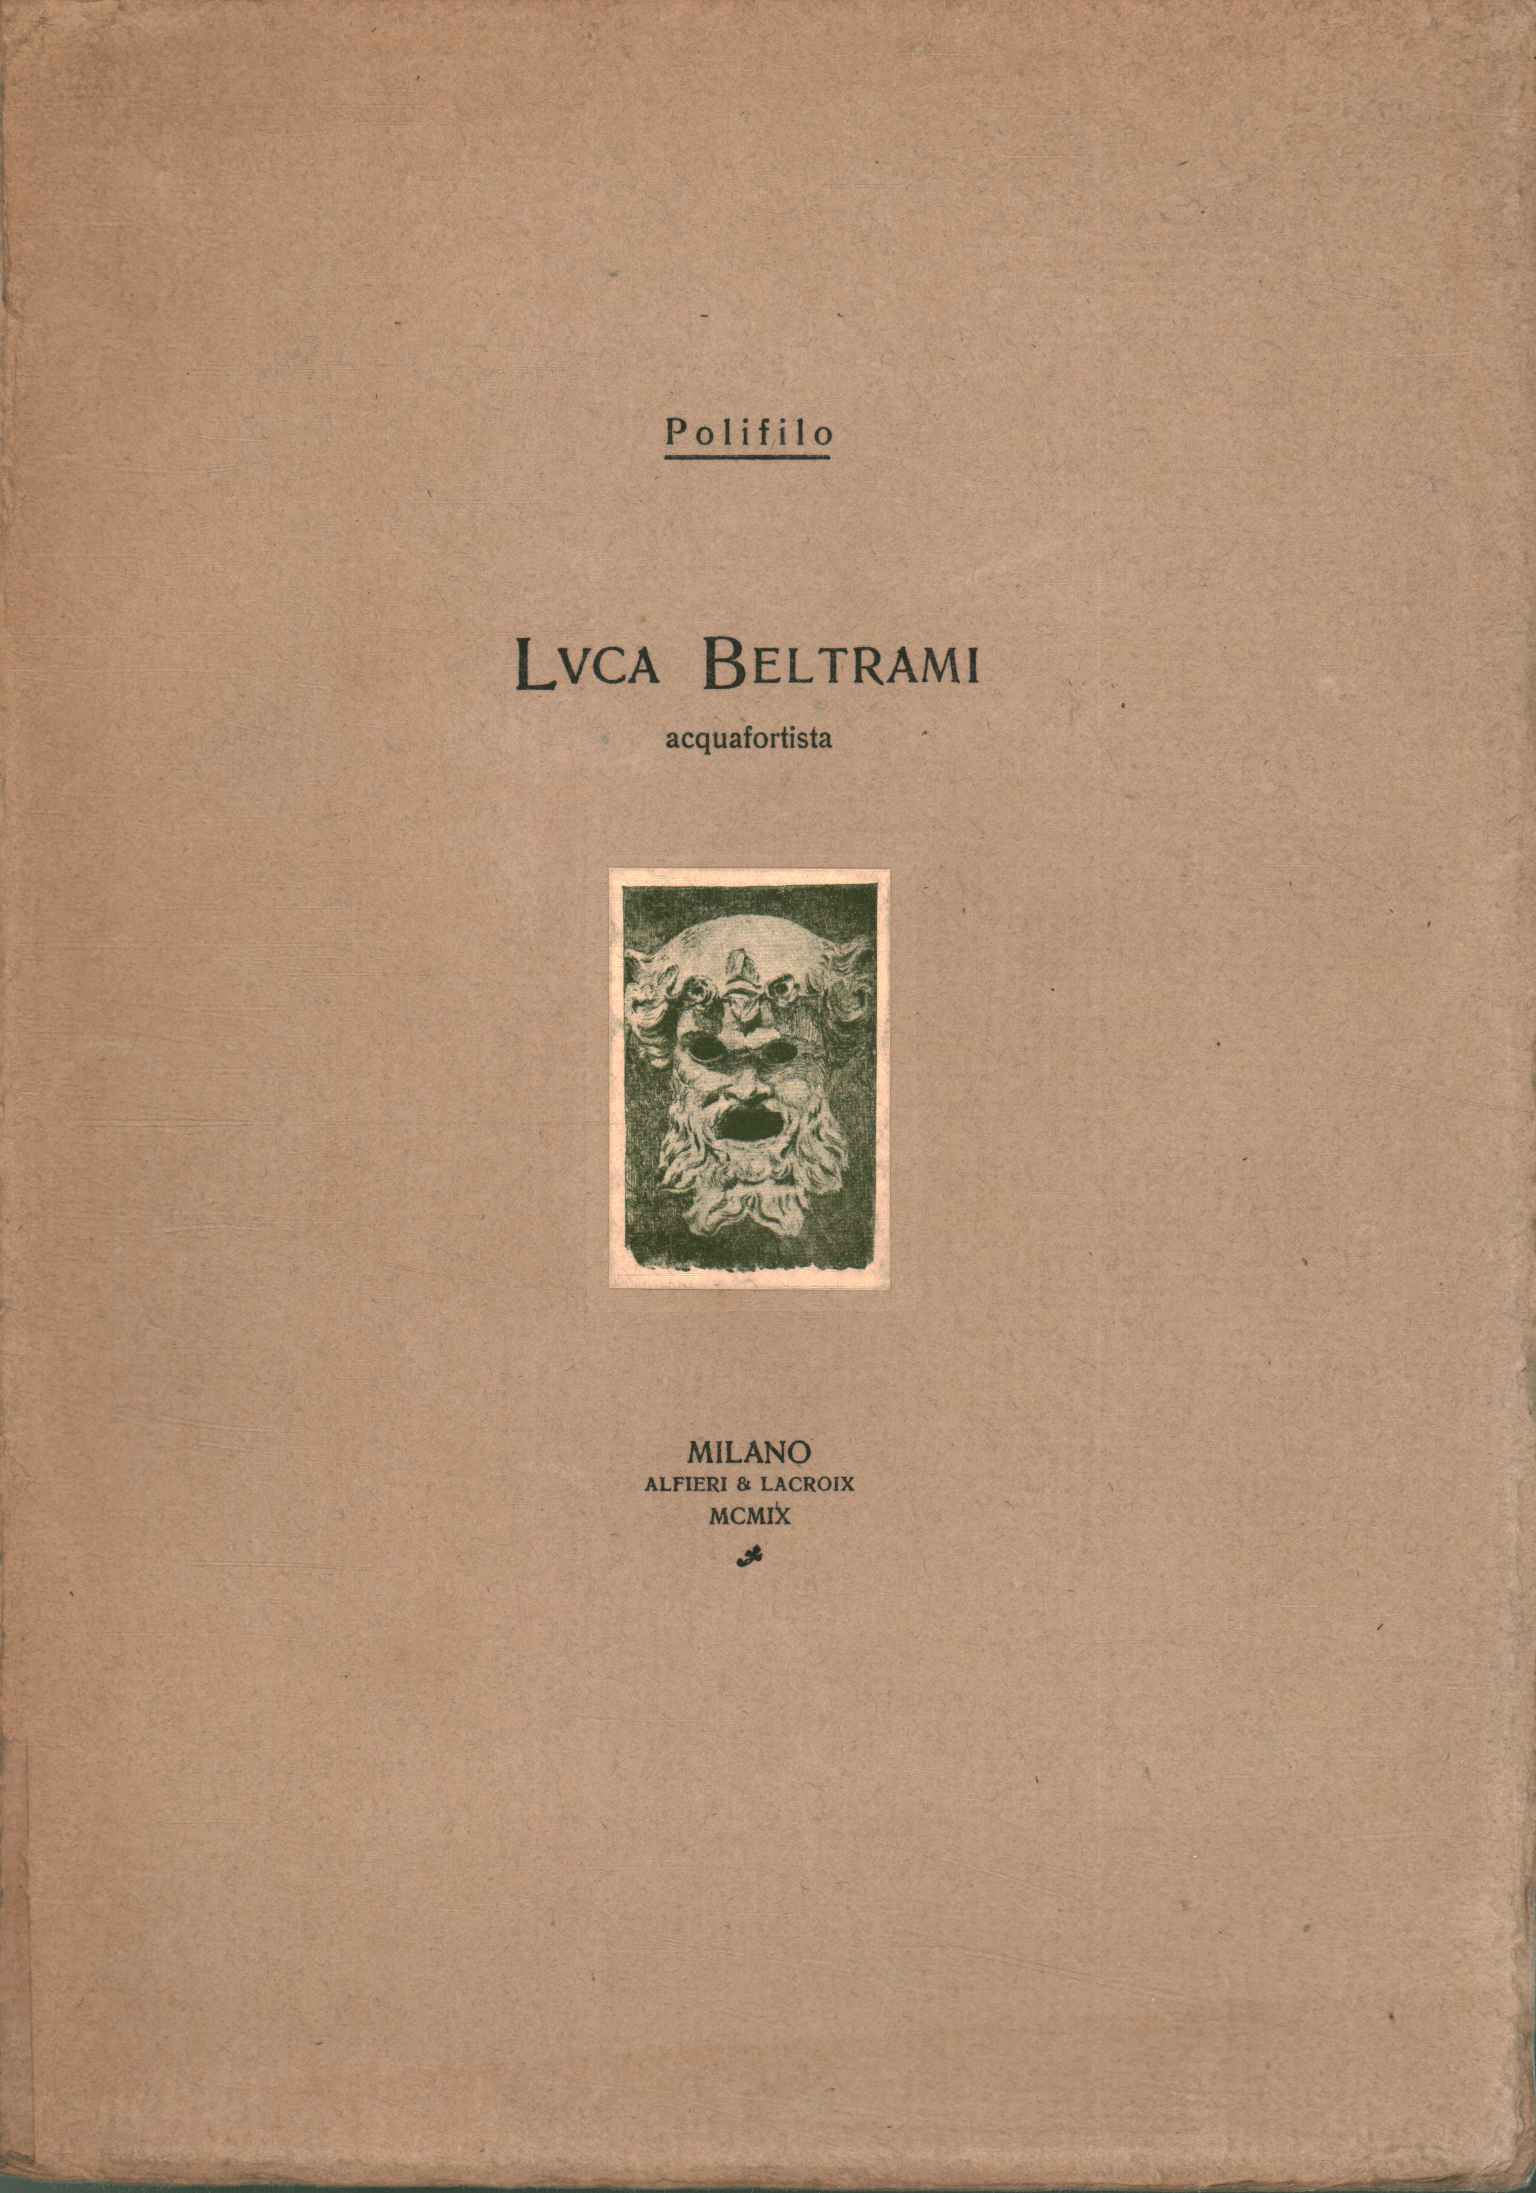 Luca Beltrami grabador